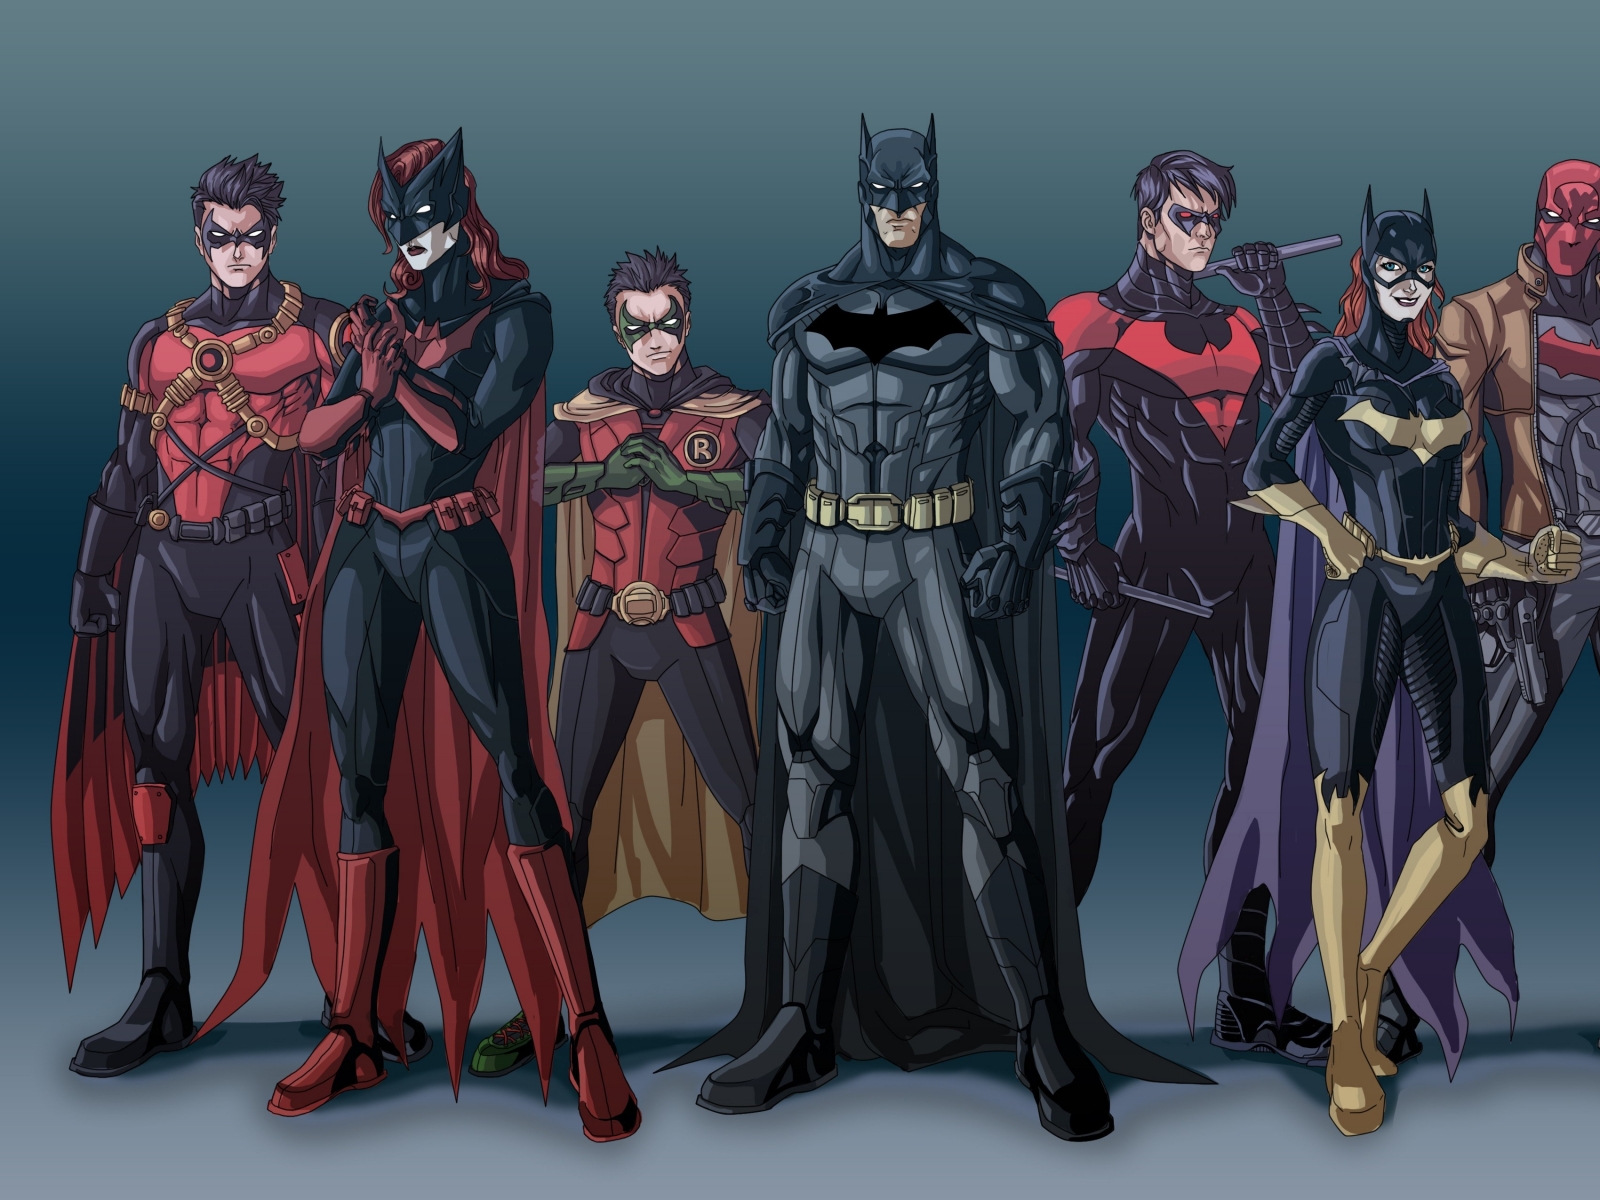  nightwing batwoman red hood red robin 3900x2550 wallpaper Wallpaper